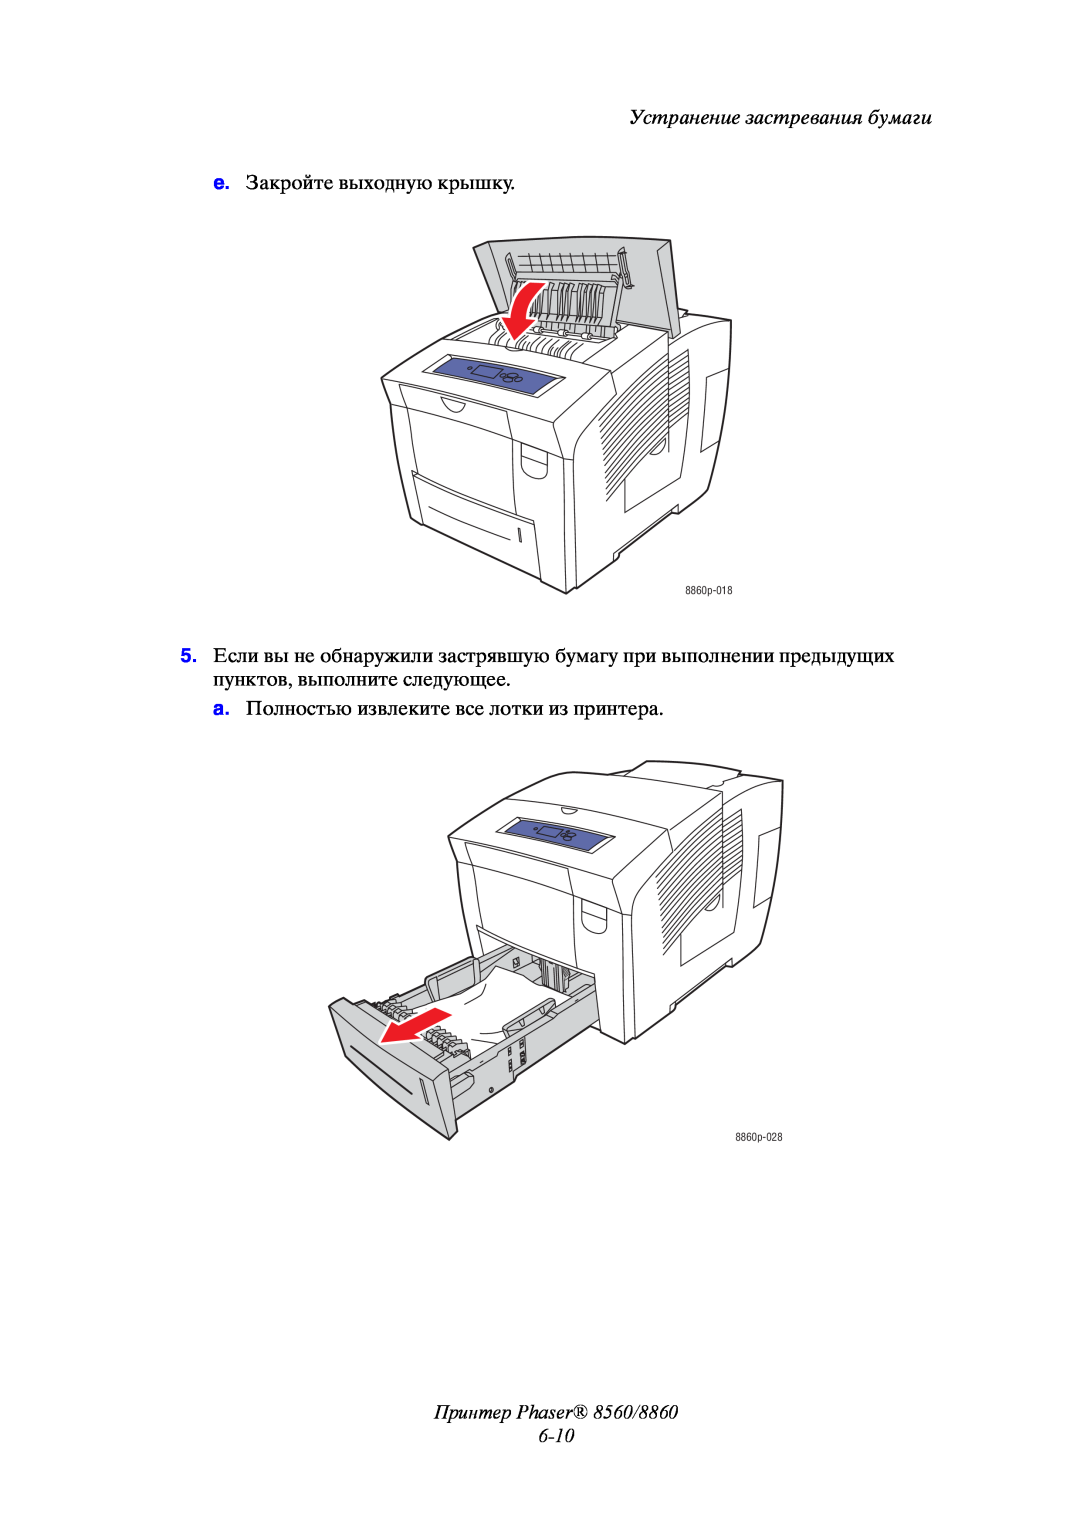 Xerox manual Принтер Phaser 8560/8860 6-10, Устранение застревания бумаги, 8860p-018, 8860p-028 